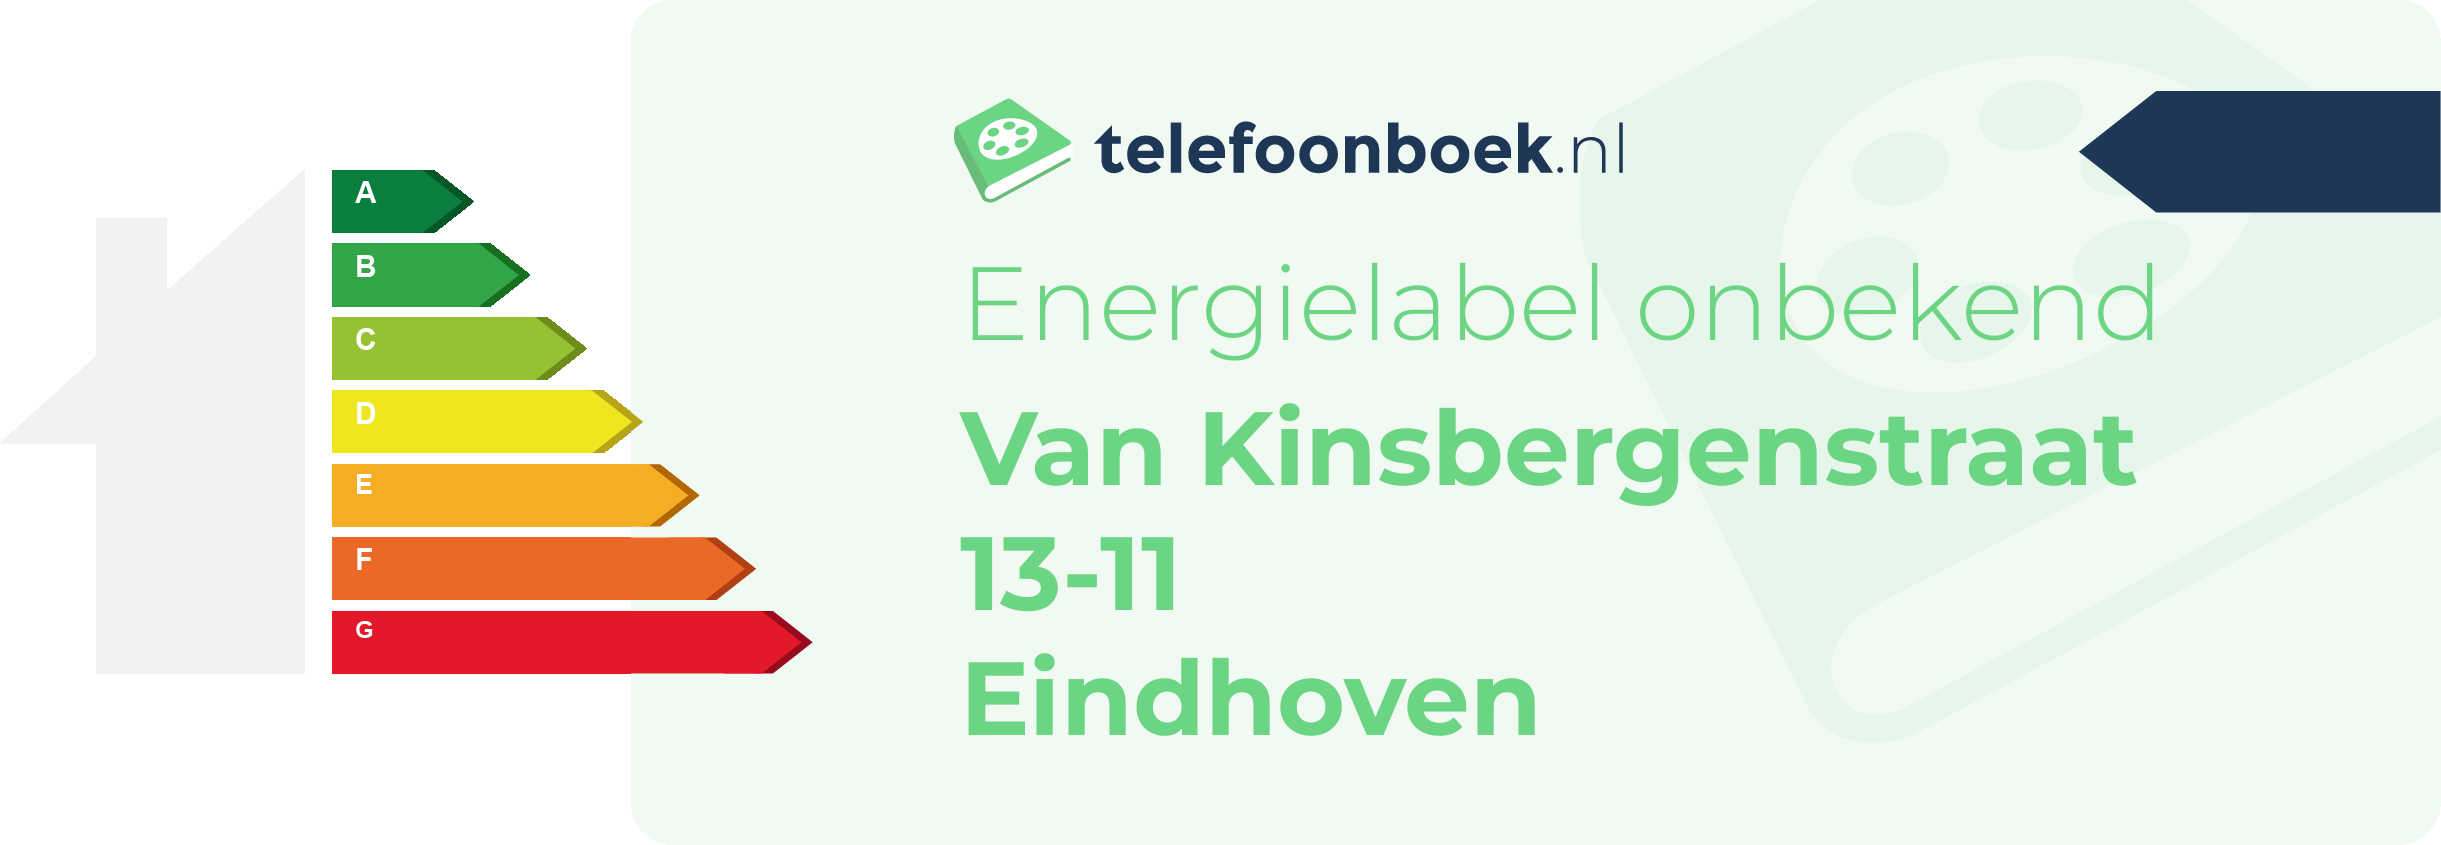 Energielabel Van Kinsbergenstraat 13-11 Eindhoven